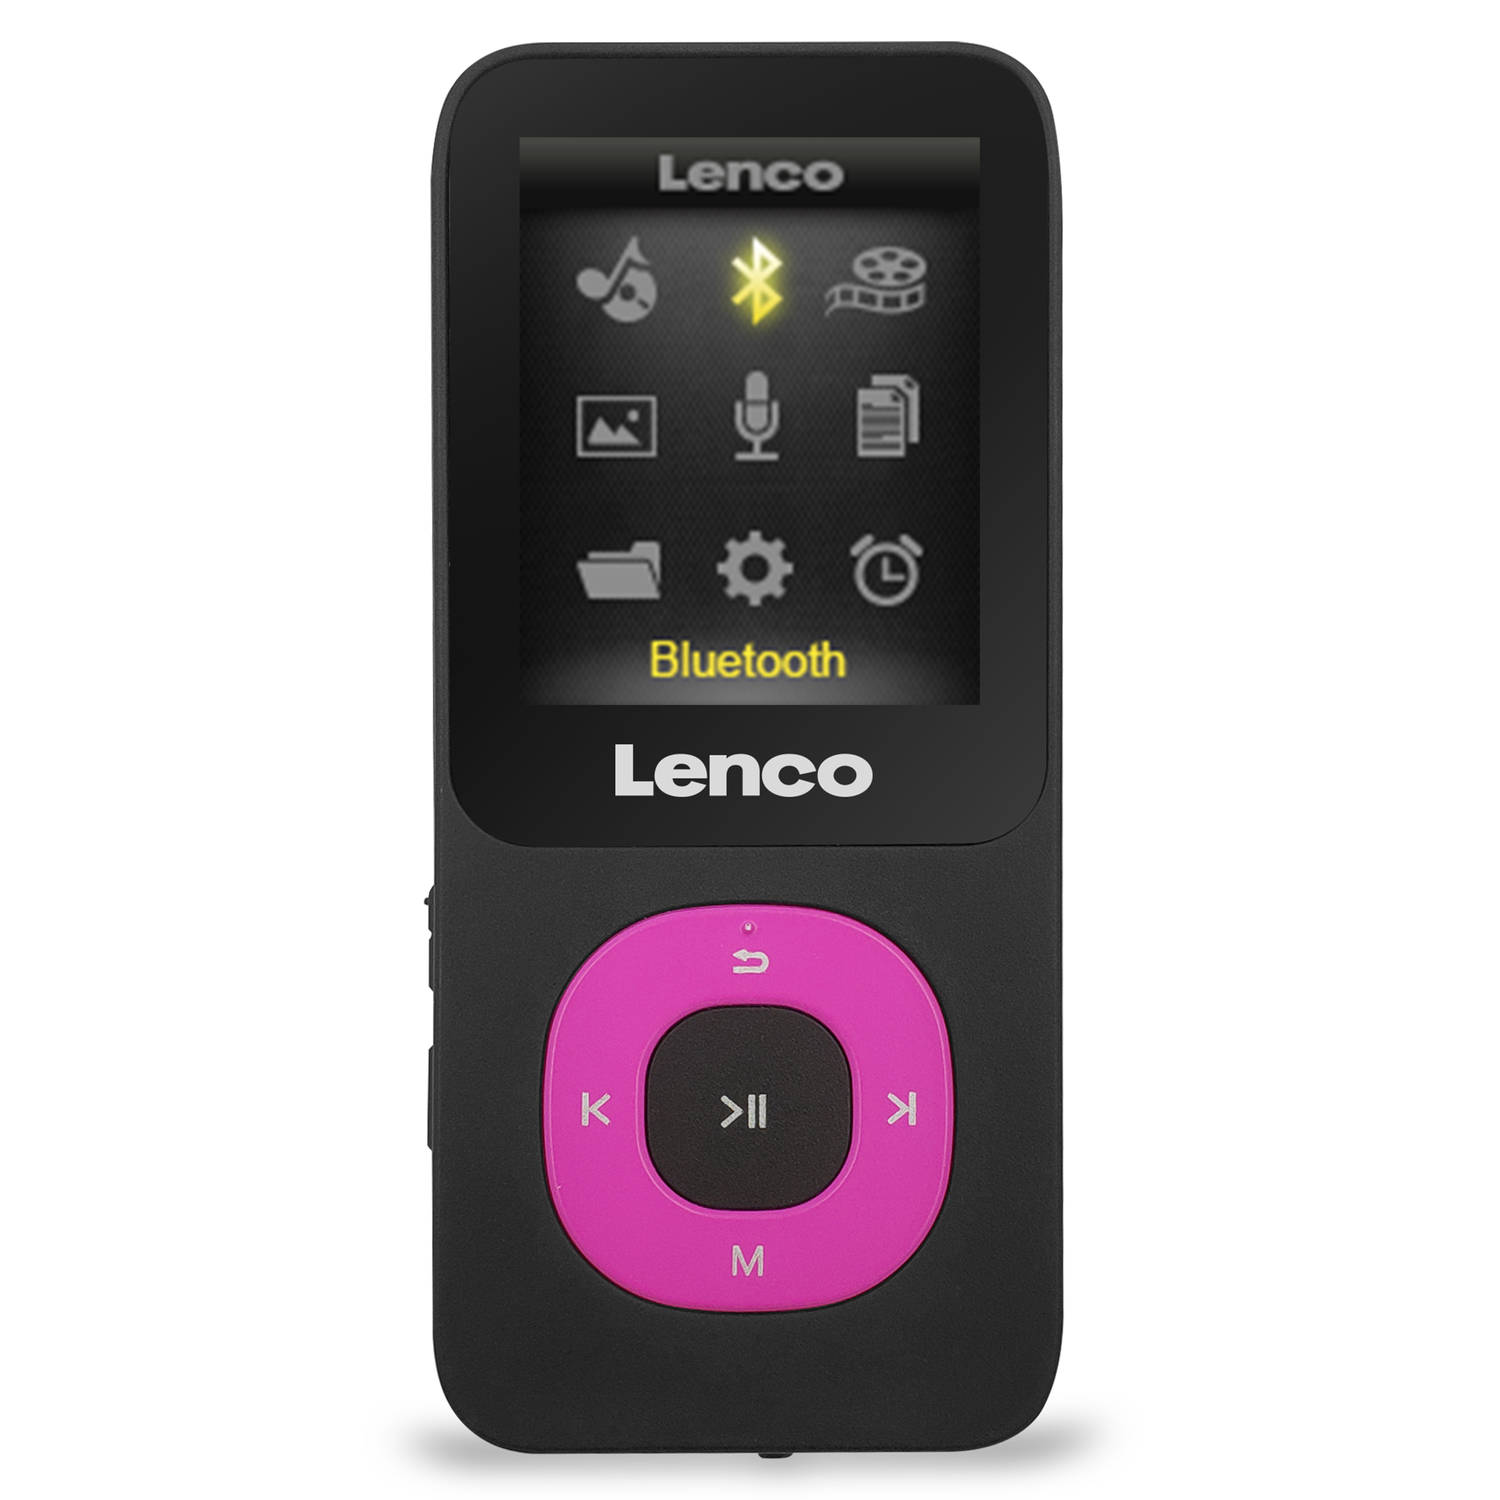 Giet basketbal Wolf in schaapskleren MP3/MP4 speler met Bluetooth® en 8 GB micro SD kaart Lenco Xemio-769PK  Zwart-Roze | Blokker